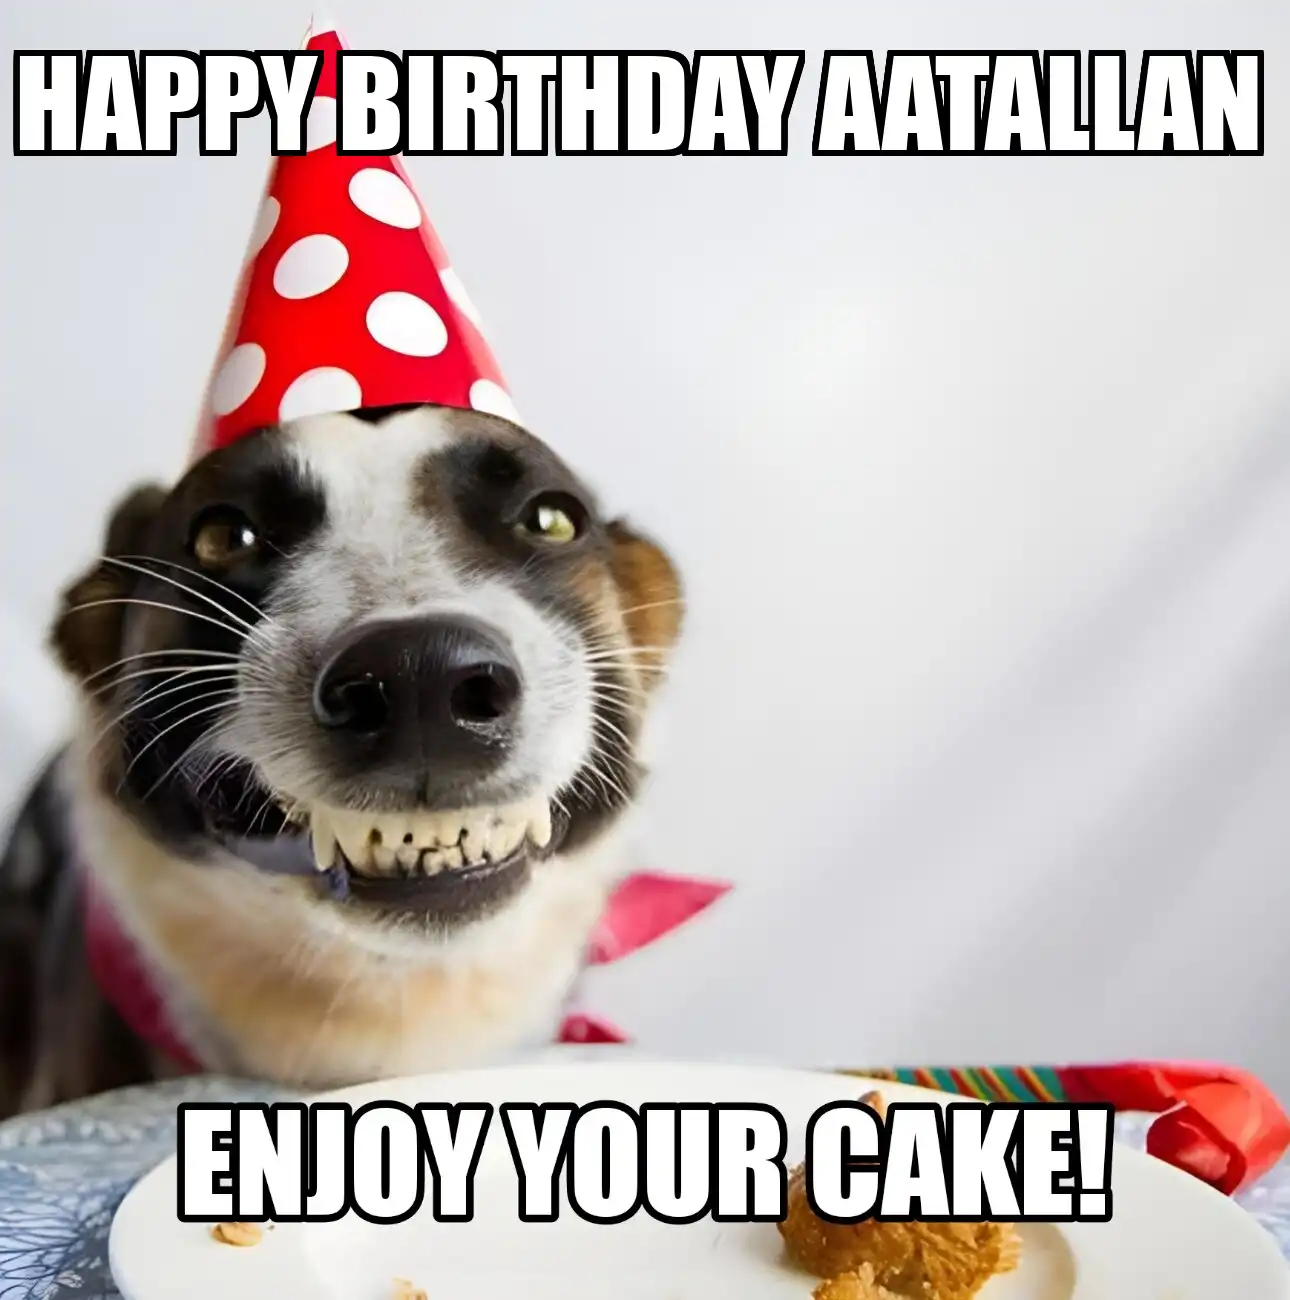 Happy Birthday Aatallan Enjoy Your Cake Dog Meme